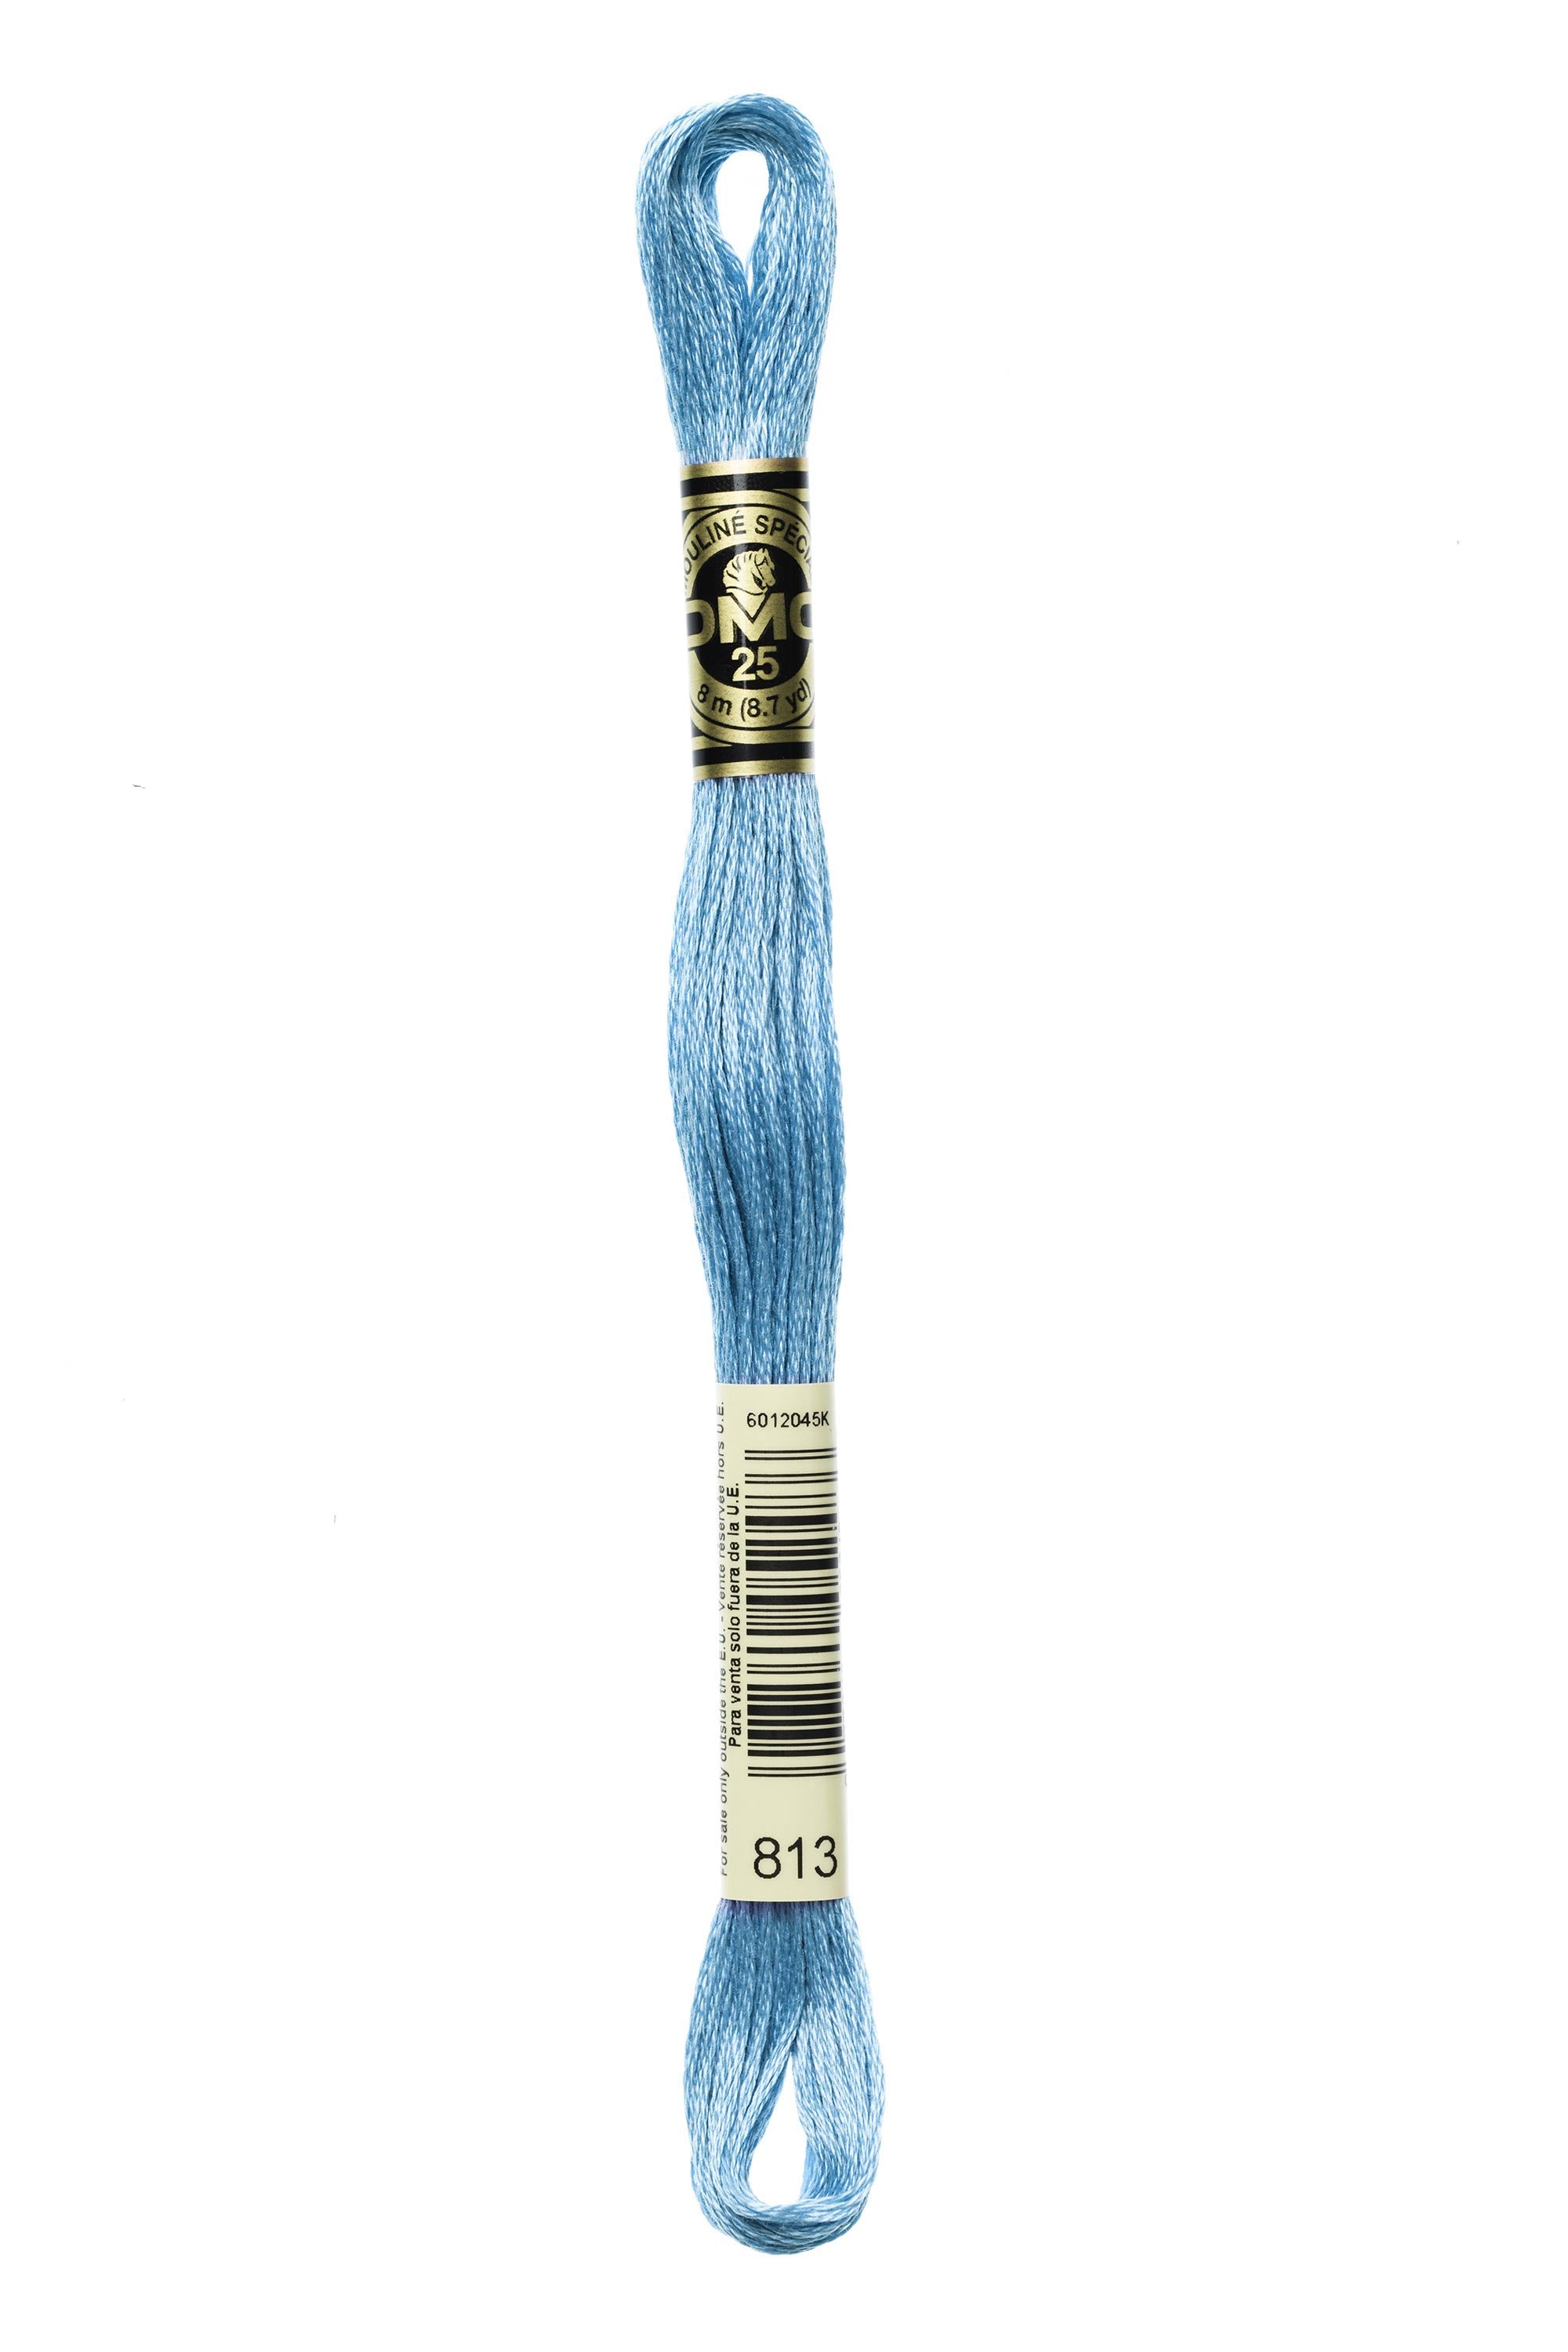 Six Strand Floss, DMC  (Light Blue Colors) 100% Cotton